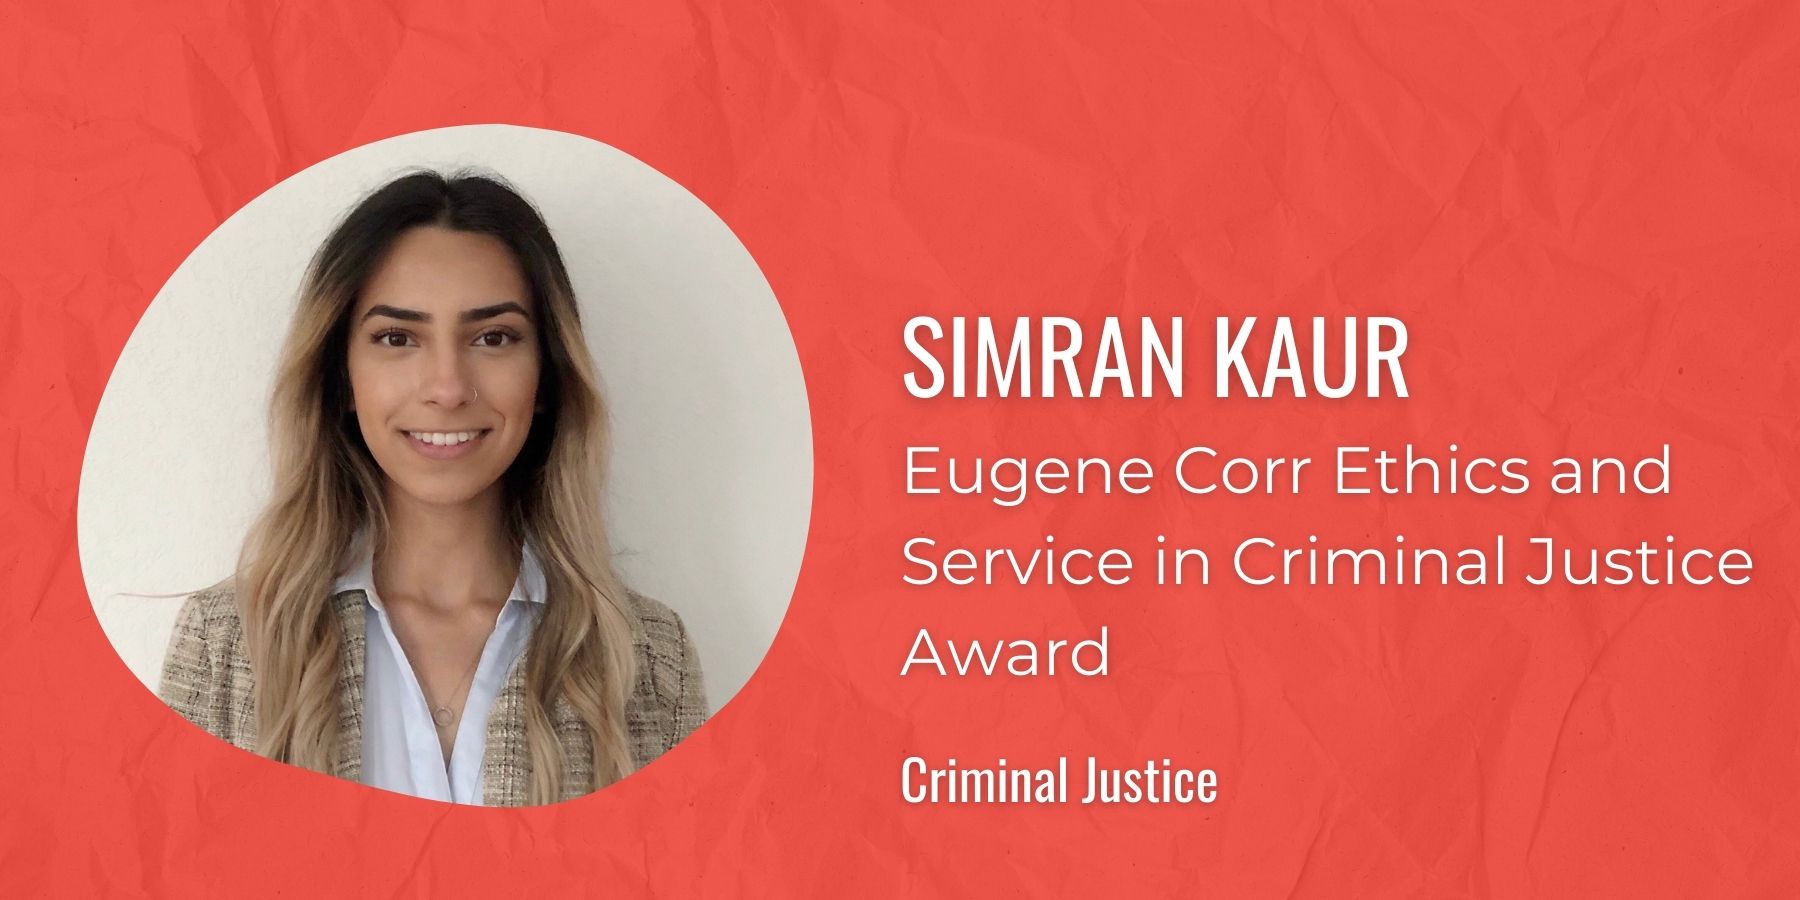 Image of Simran Kaur, text:Eugene Corr Ethics & Service in Criminal Justice Award, Criminal Justice
